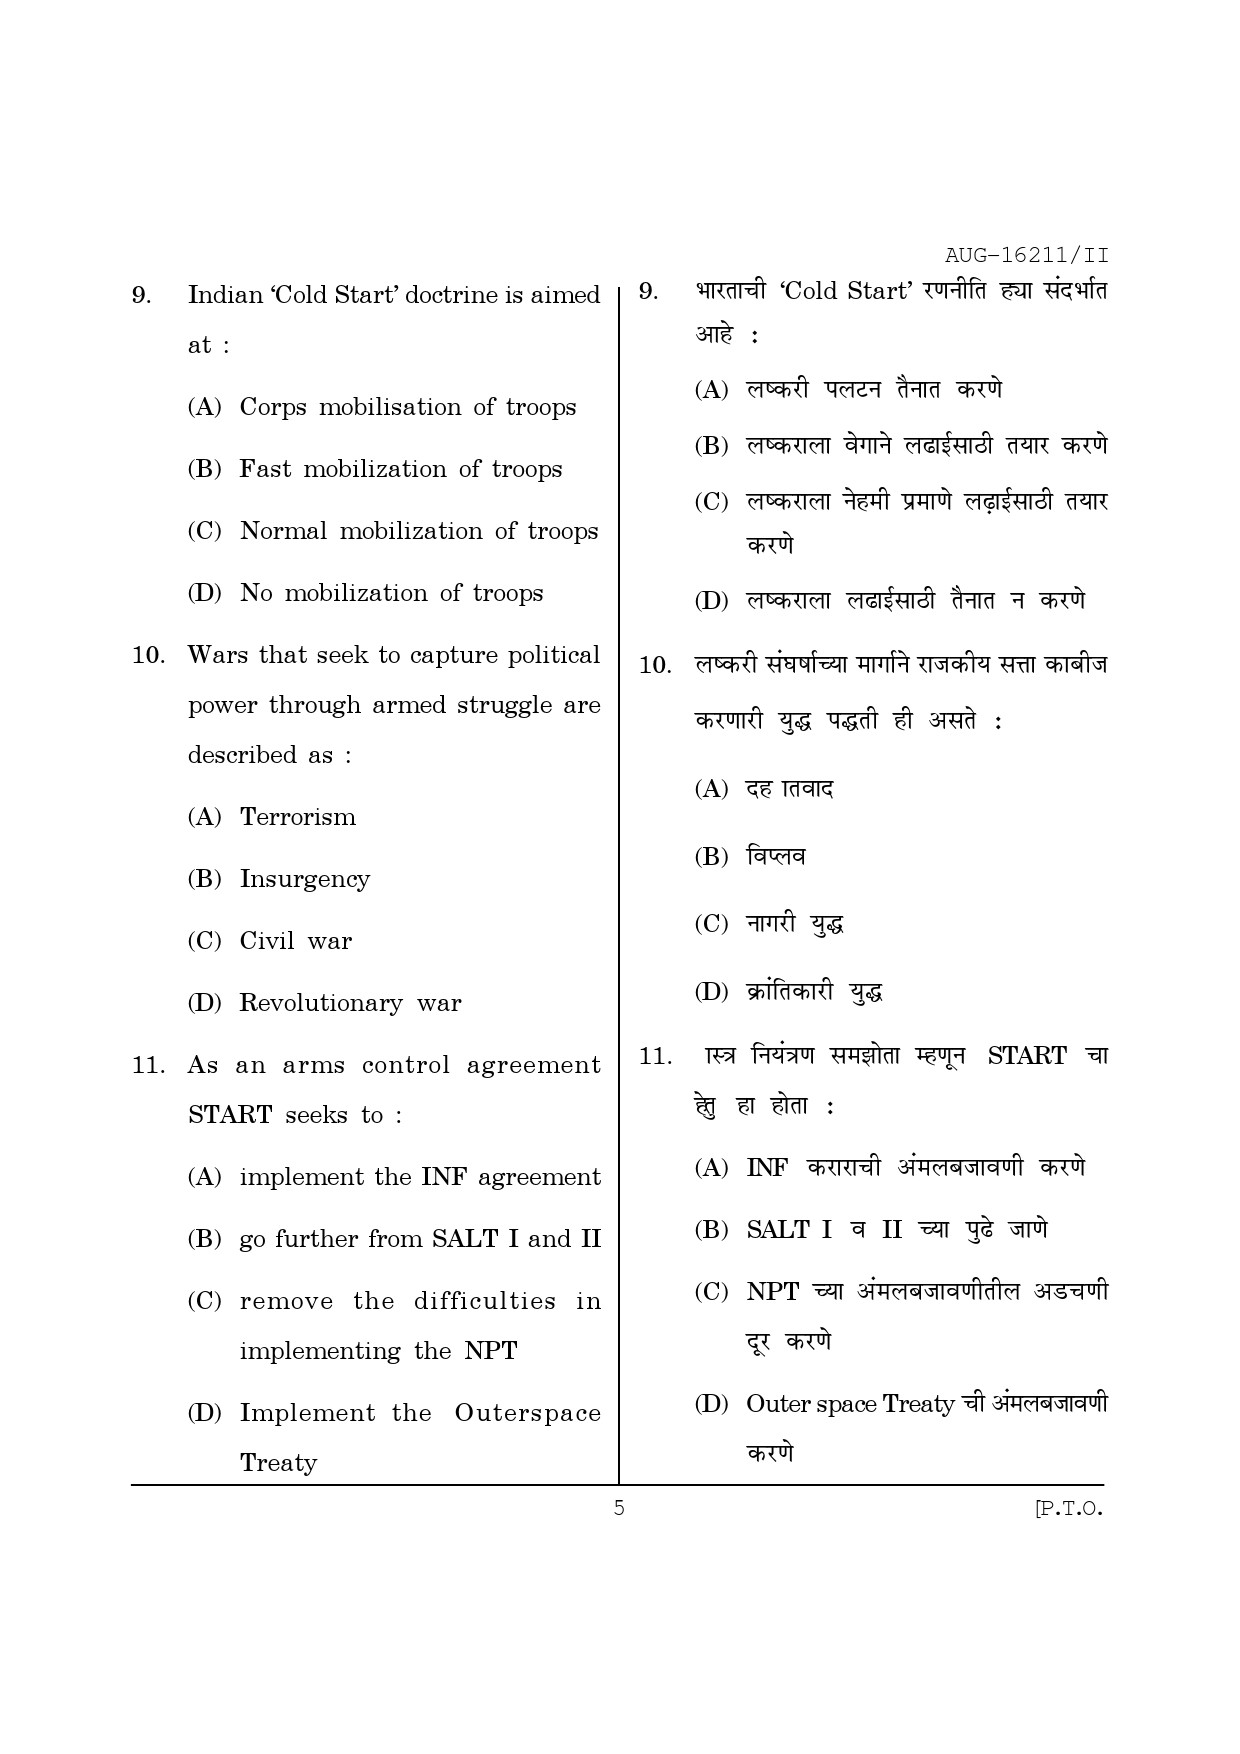 Maharashtra SET Defence and Strategic Studies Question Paper II August 2011 5